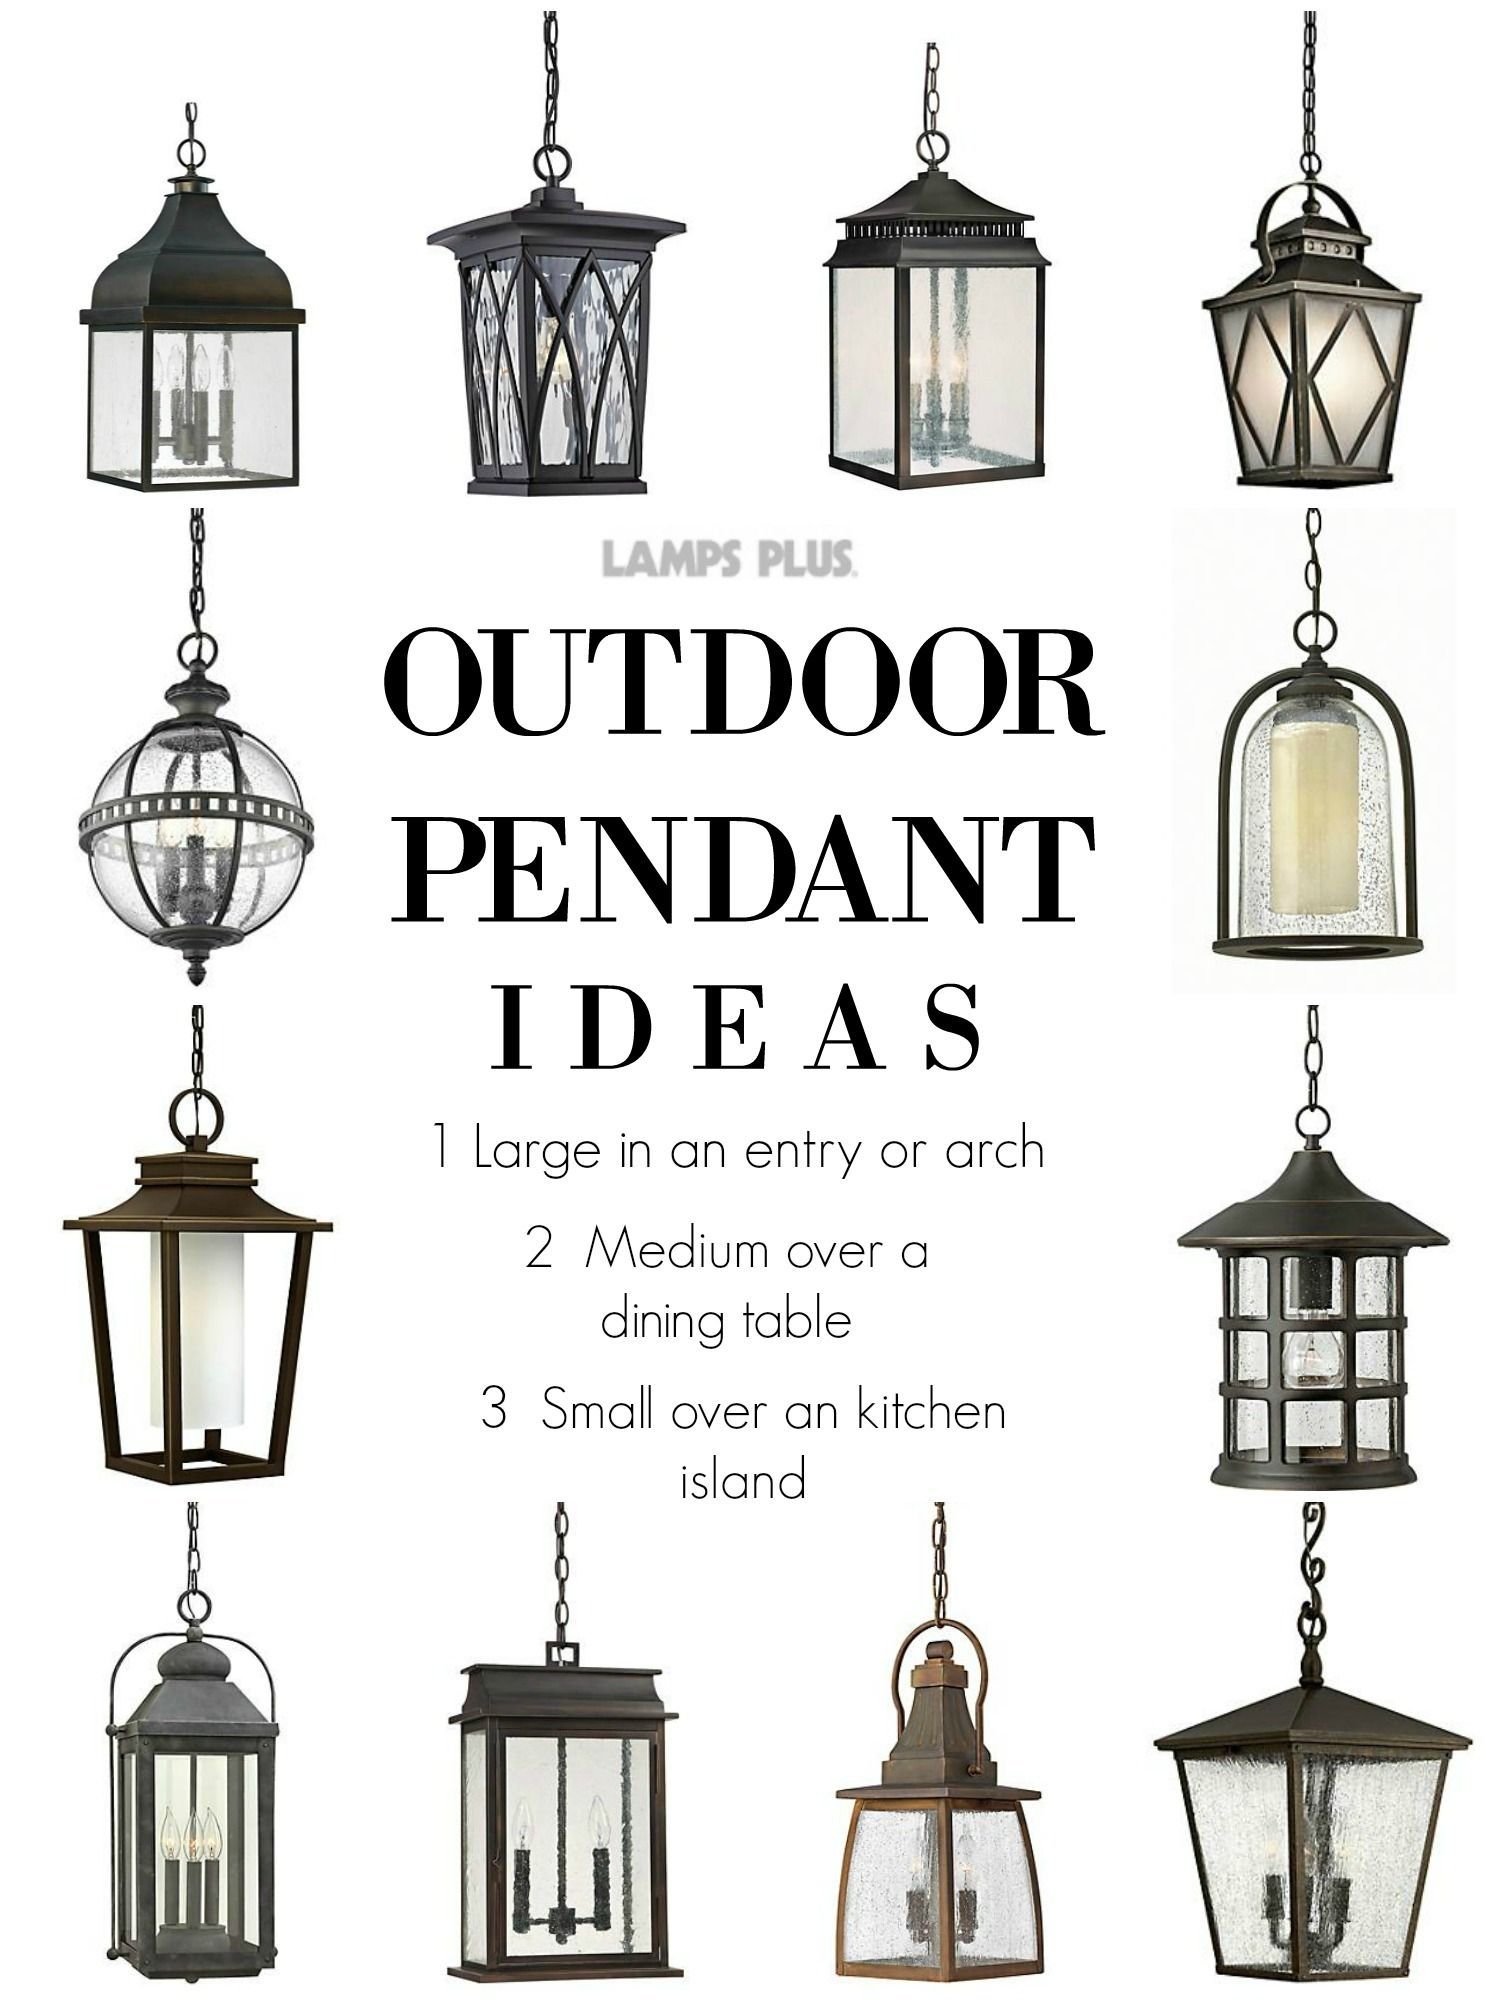 Outdoor Lighting – Outdoor Pendant Ideas From @lampsplus In Lamps Plus Outdoor Ceiling Lights (View 4 of 15)